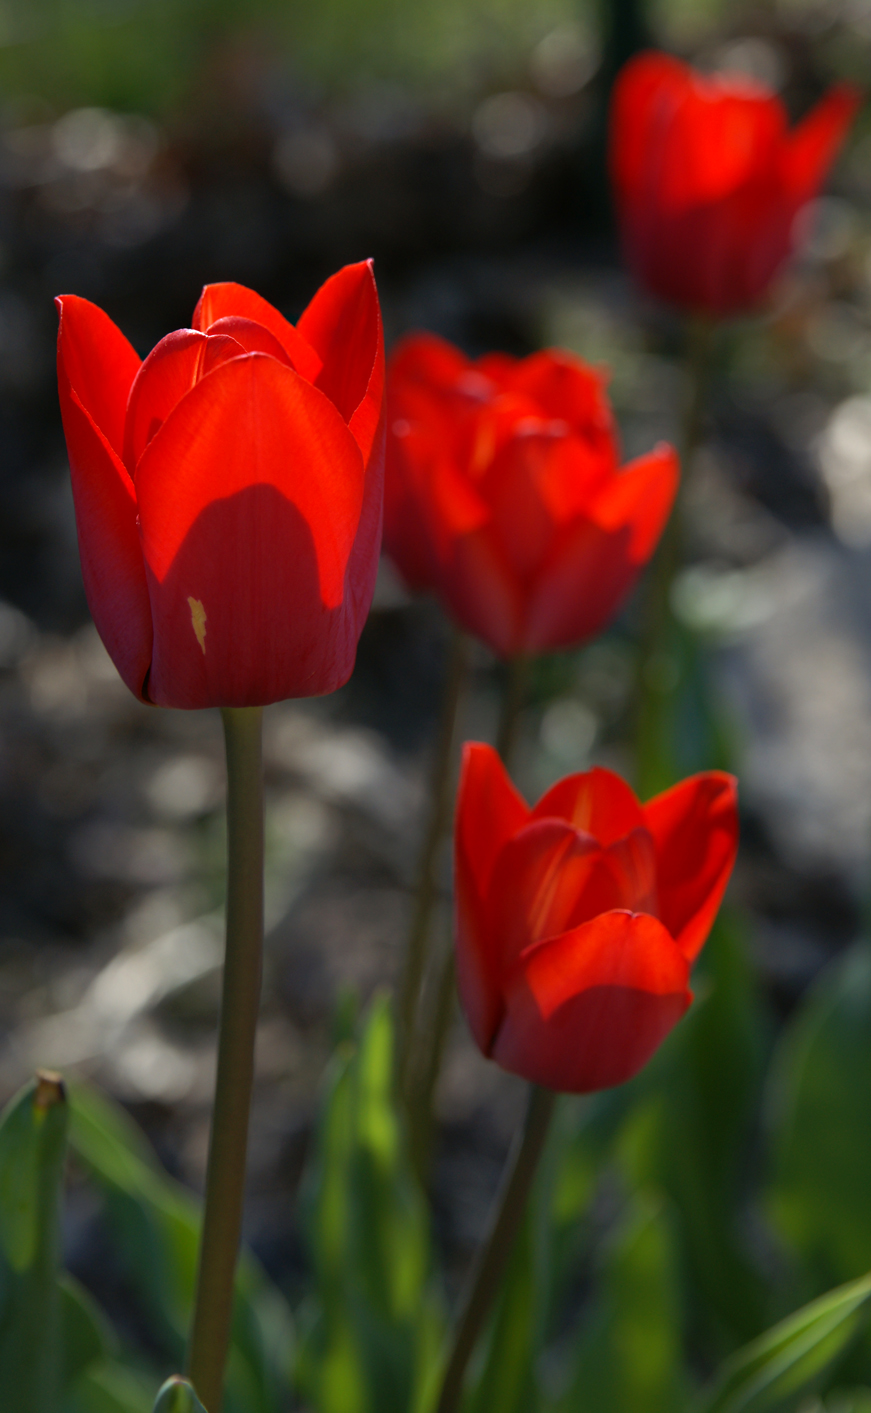 Brilliant Red Tulip Petals. No editing of the color!